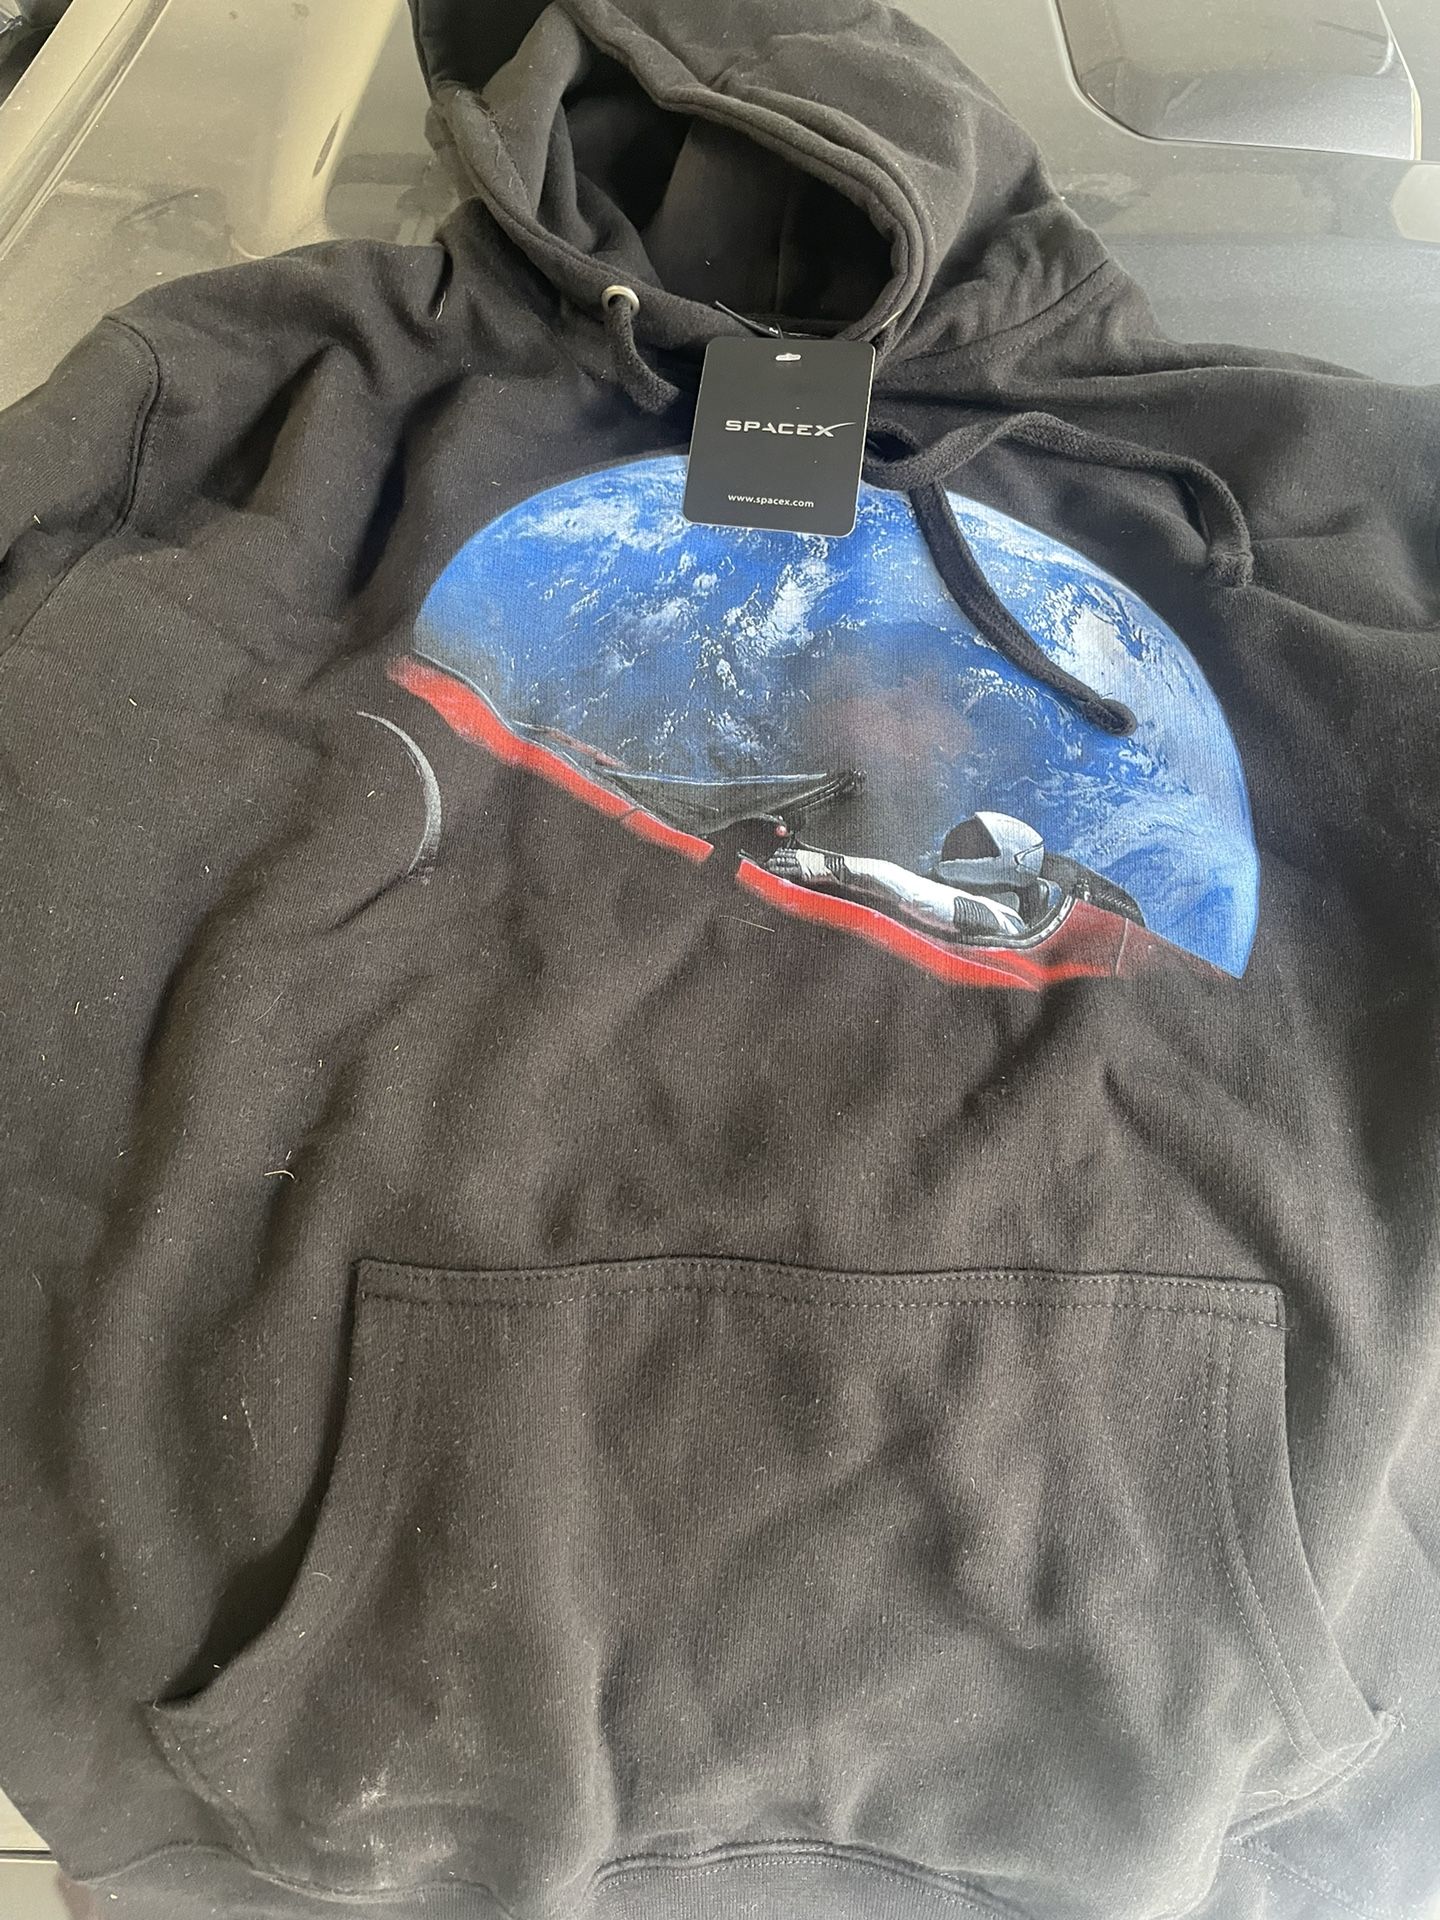 Space X Sweatshirt